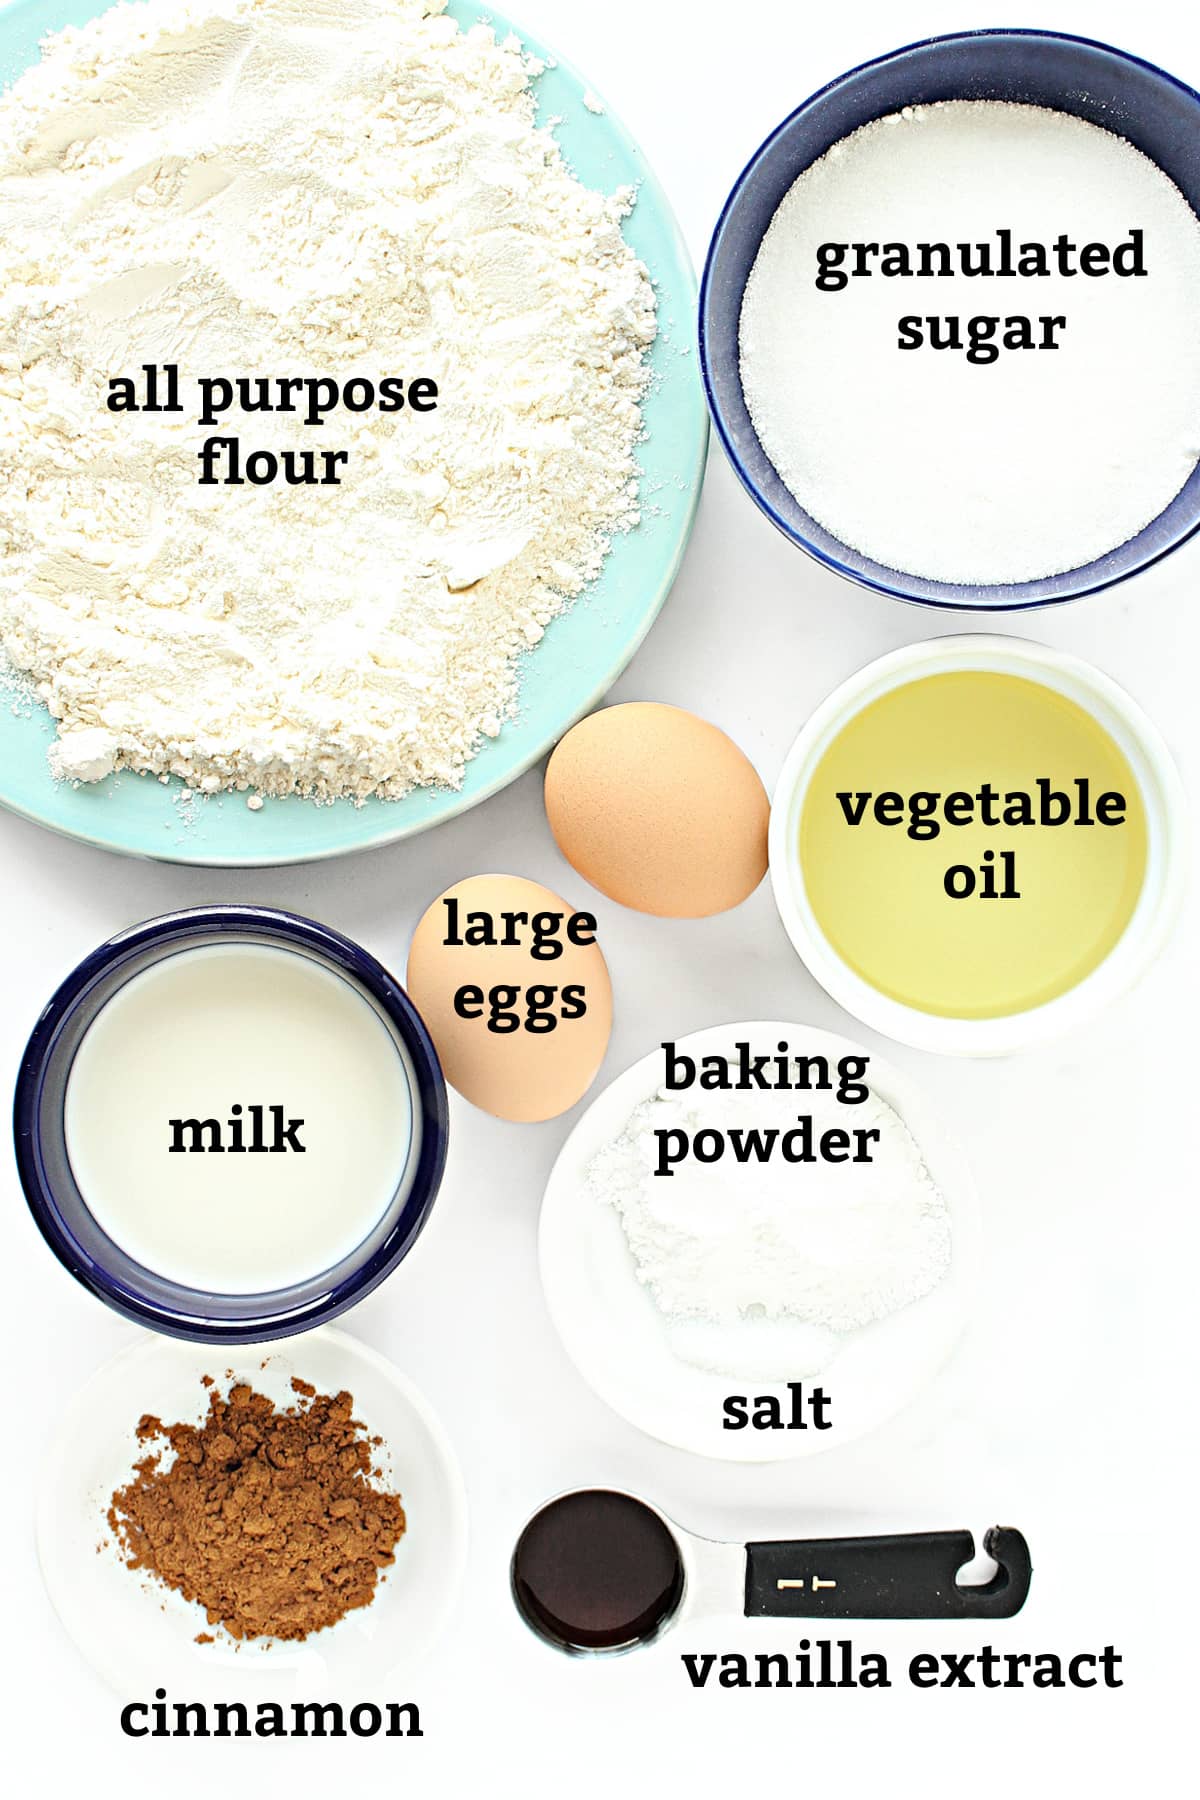 Ingredients: all purpose flour, sugar, vegetable oil, large eggs, milk, baking powder, salt, cinnamon, vanilla.